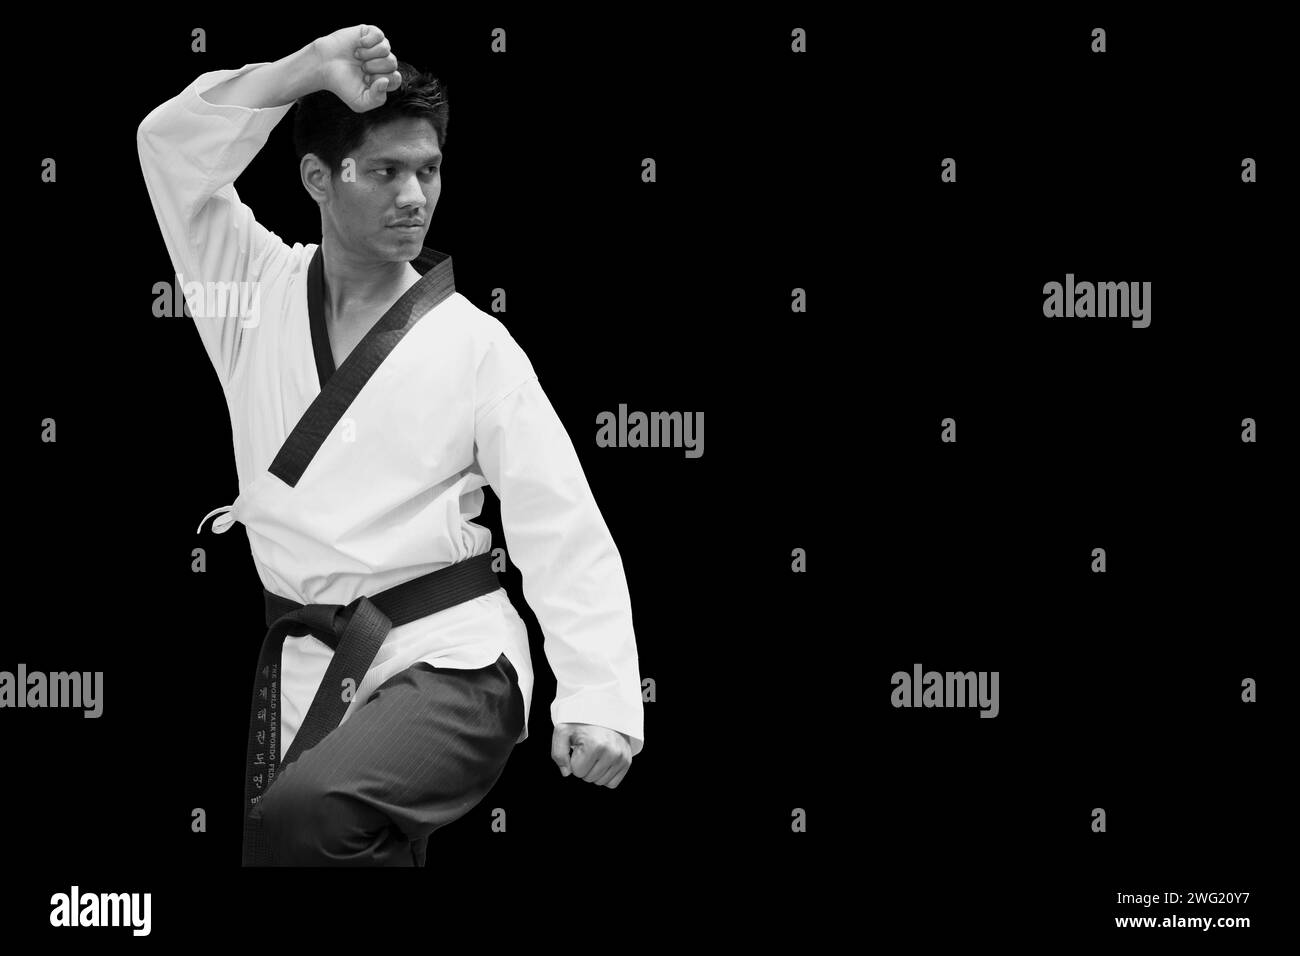 Taekwondo master judo aikido or karate man black belt action tiger stand for self defense self defense martial arts advertising Stock Photo